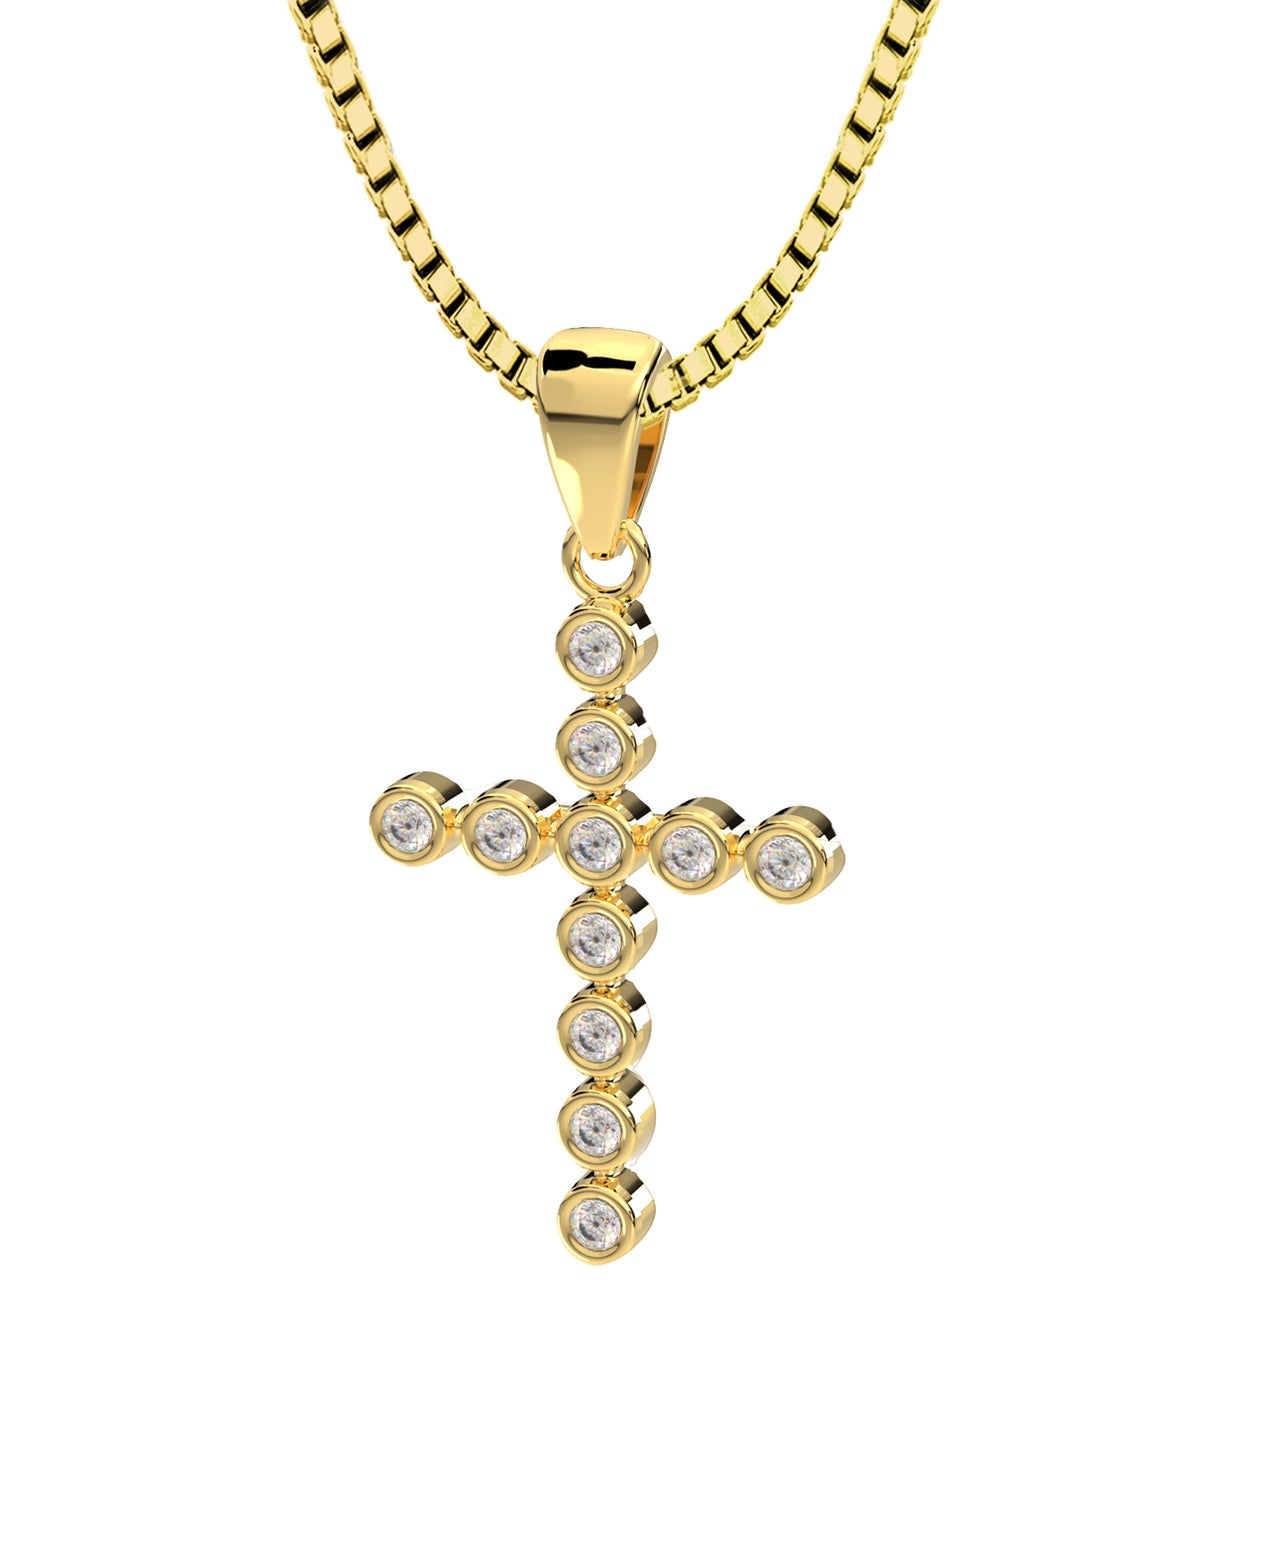 Small Ladies 14k Yellow Gold Diamond Cross Pendant Necklace, 18mm